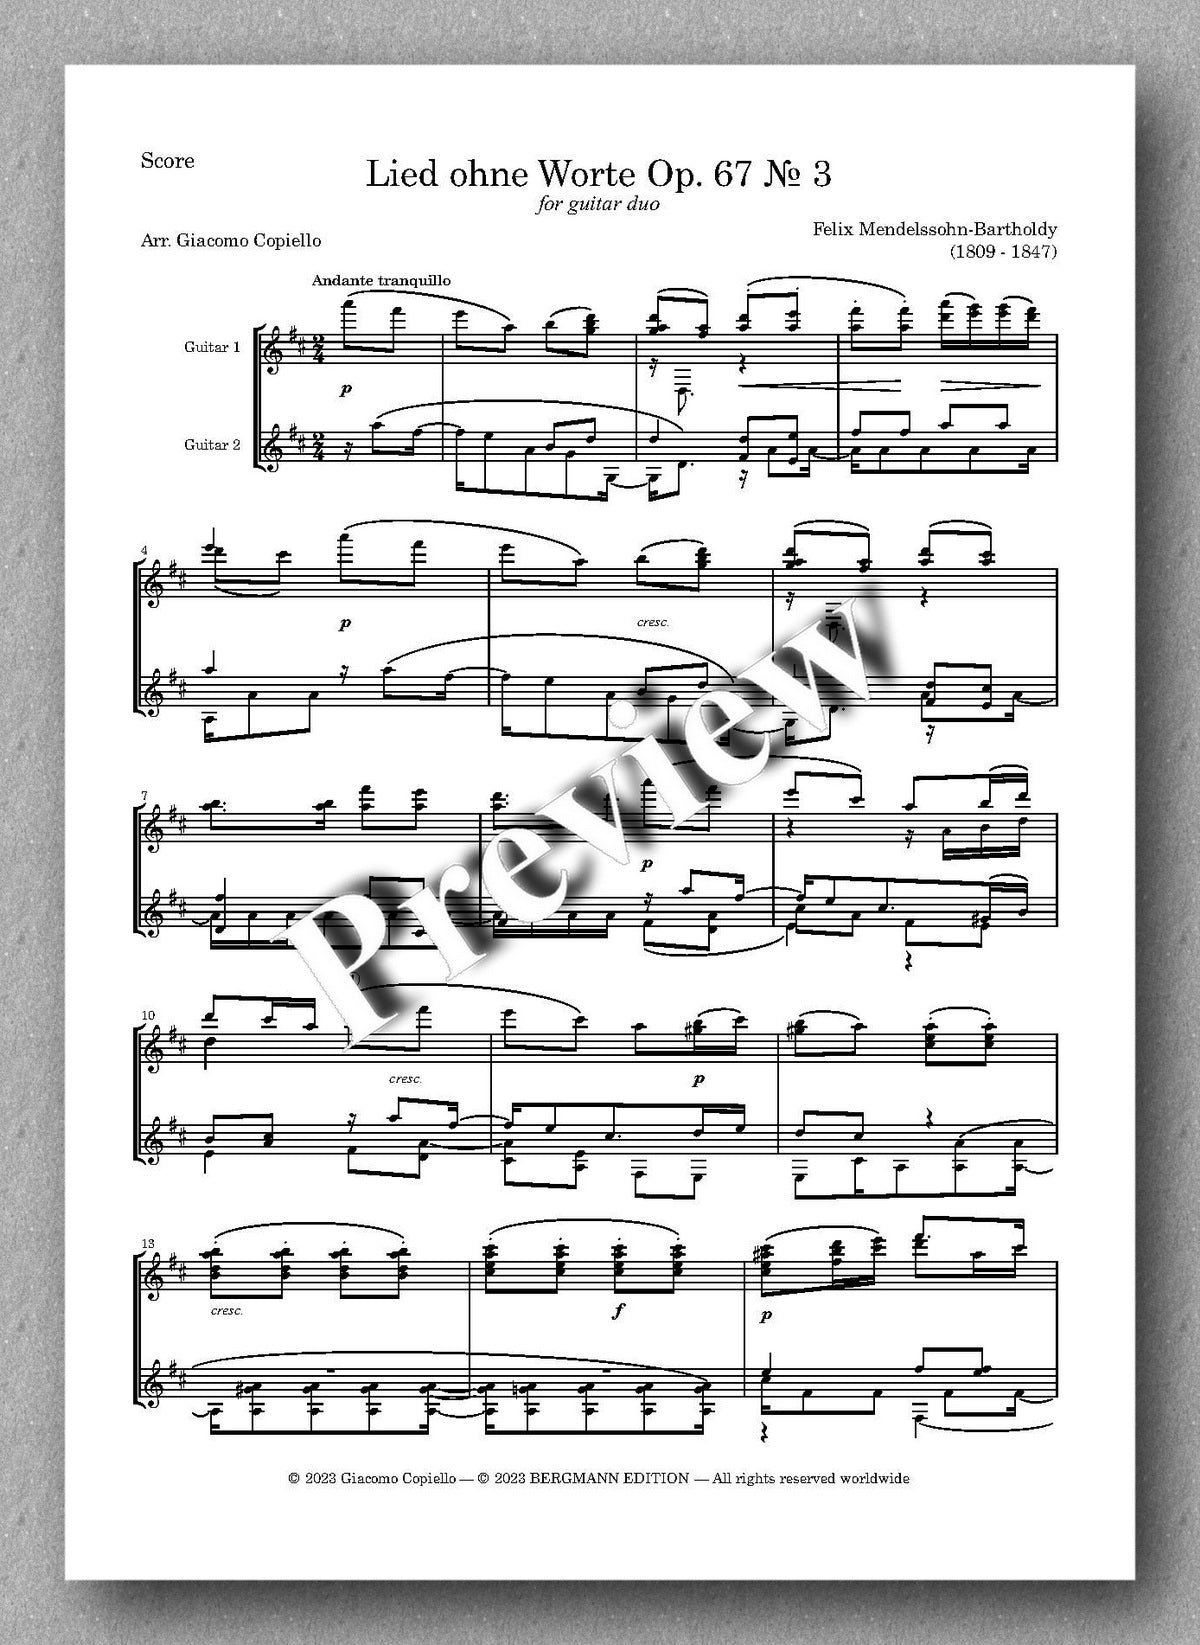 Lieder vol. 4, by Felix Mendelssohn - preview of the music score 2